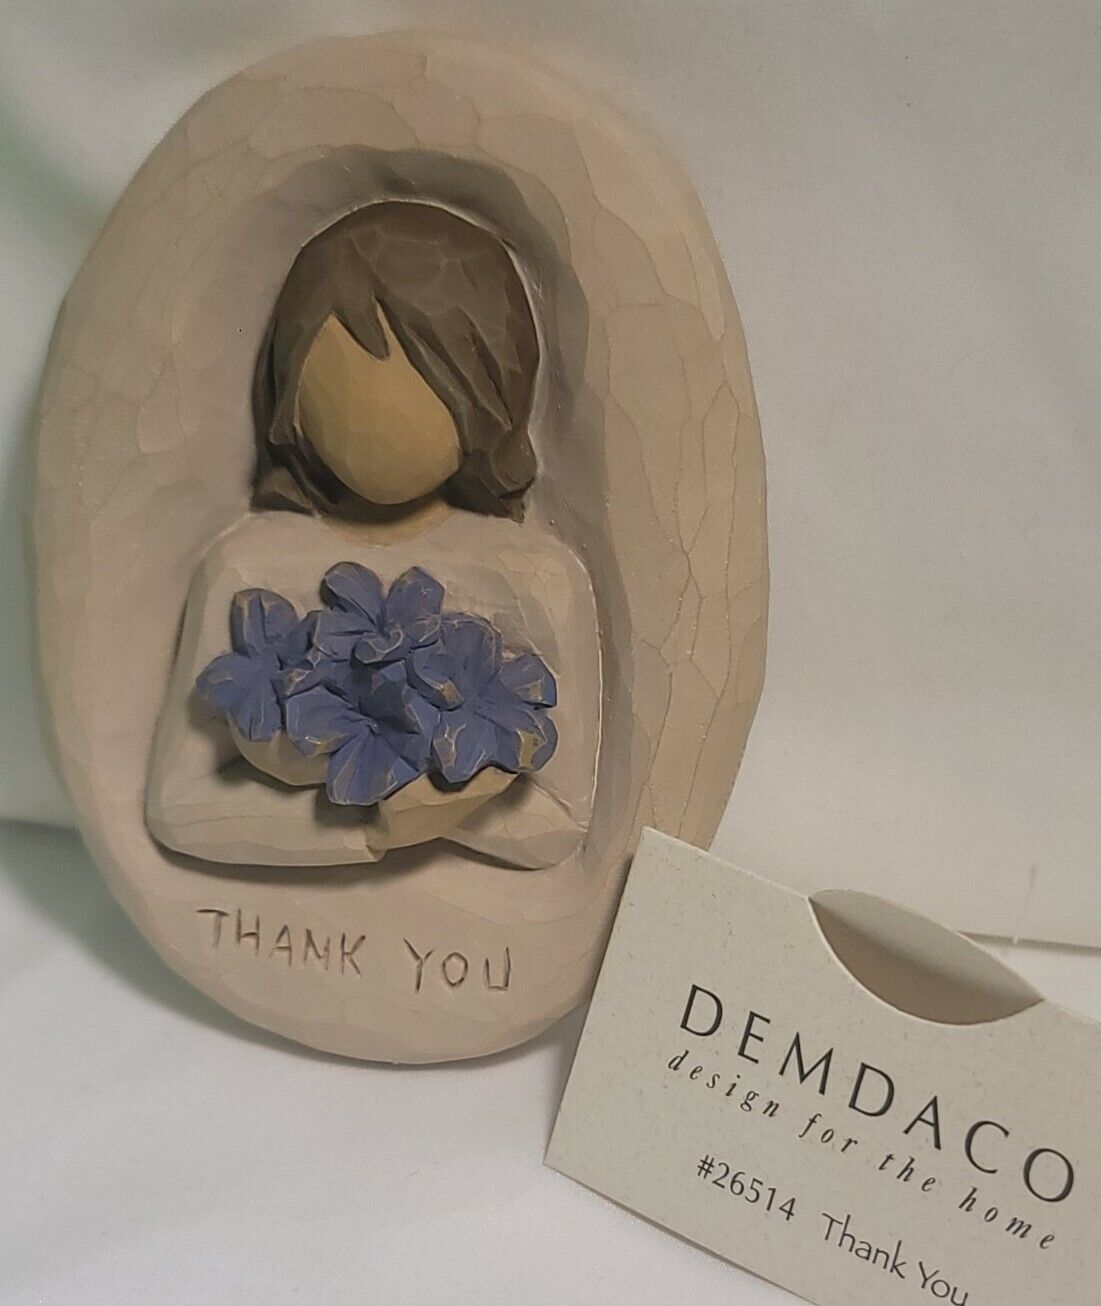 3D Willow Tree Thank You Plaque Handmade Susan Lordi Demdaco #26514 Wall Art 